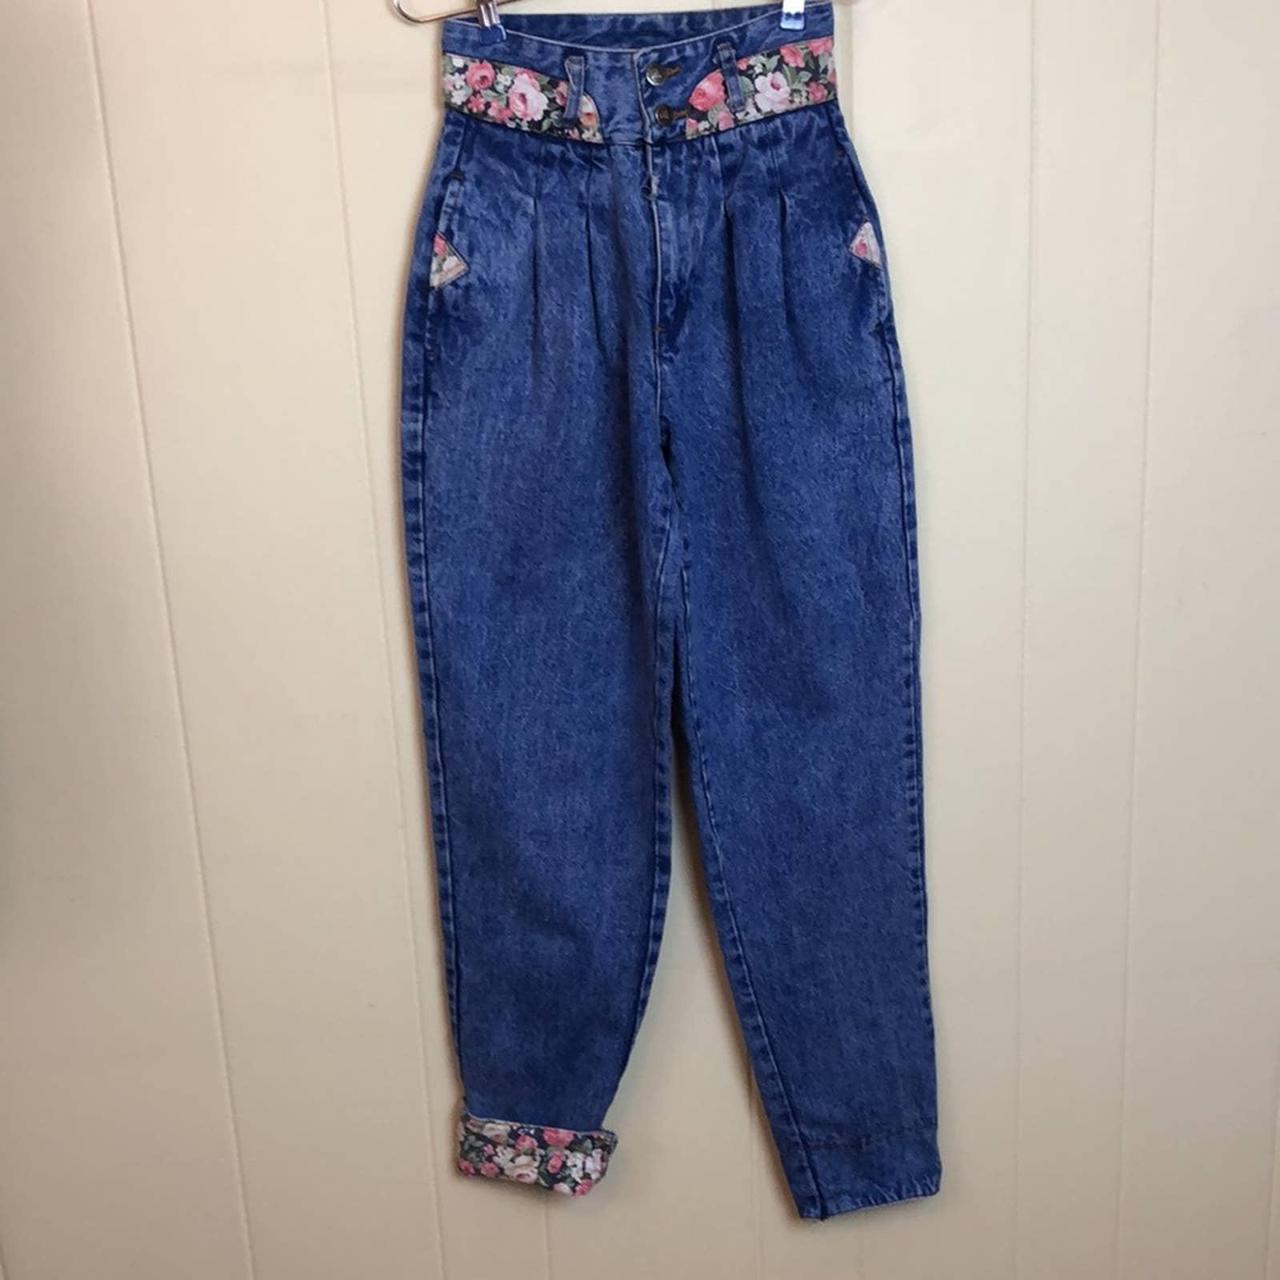 Vintage 90’s Floral High Waisted Mom Jeans